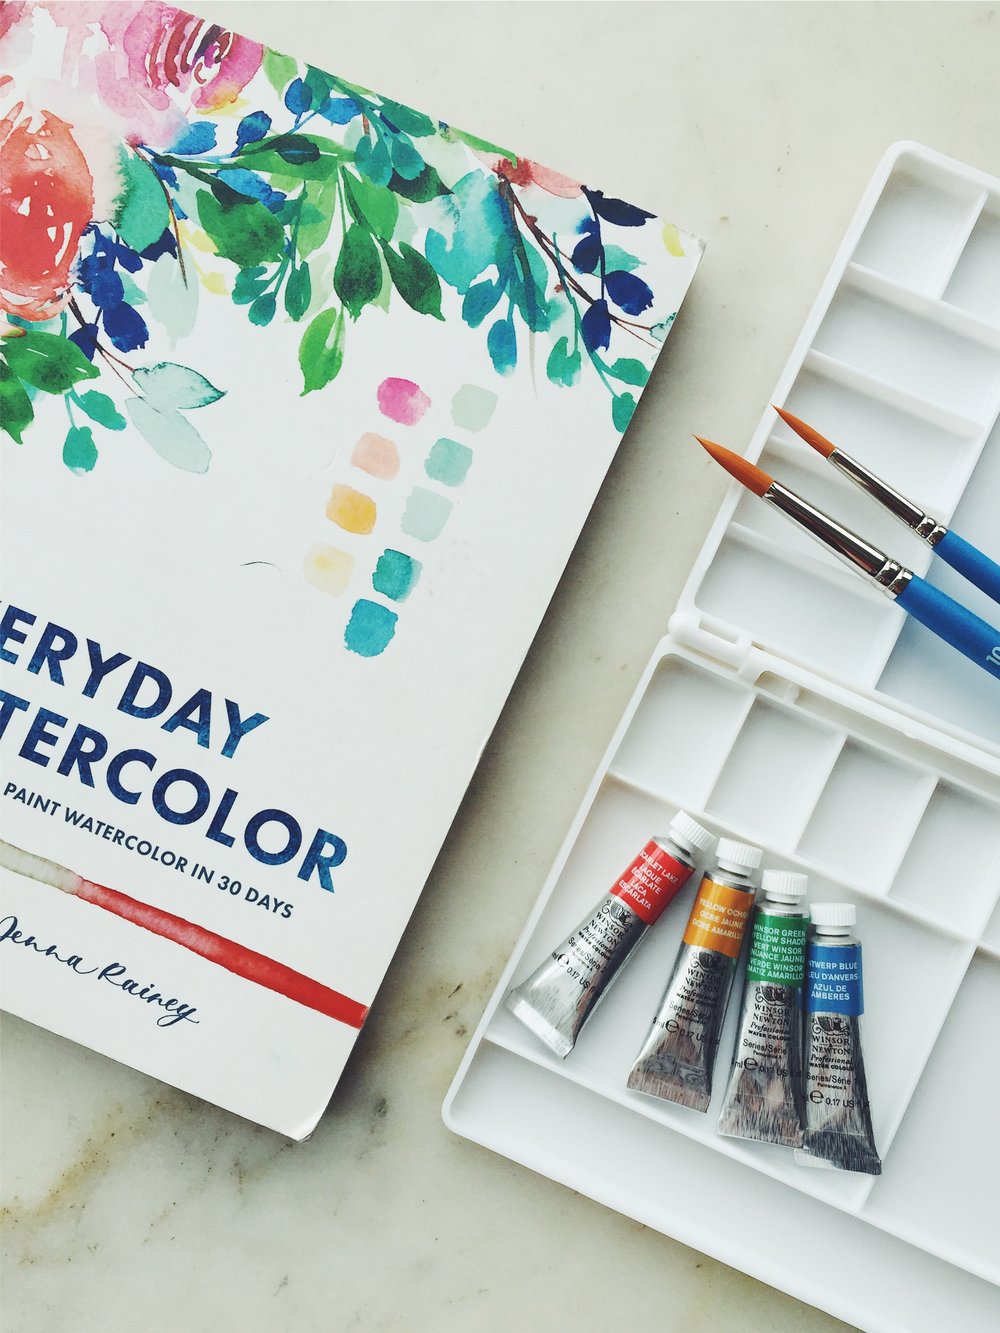 Everyday Watercolor by Jenna Rainey